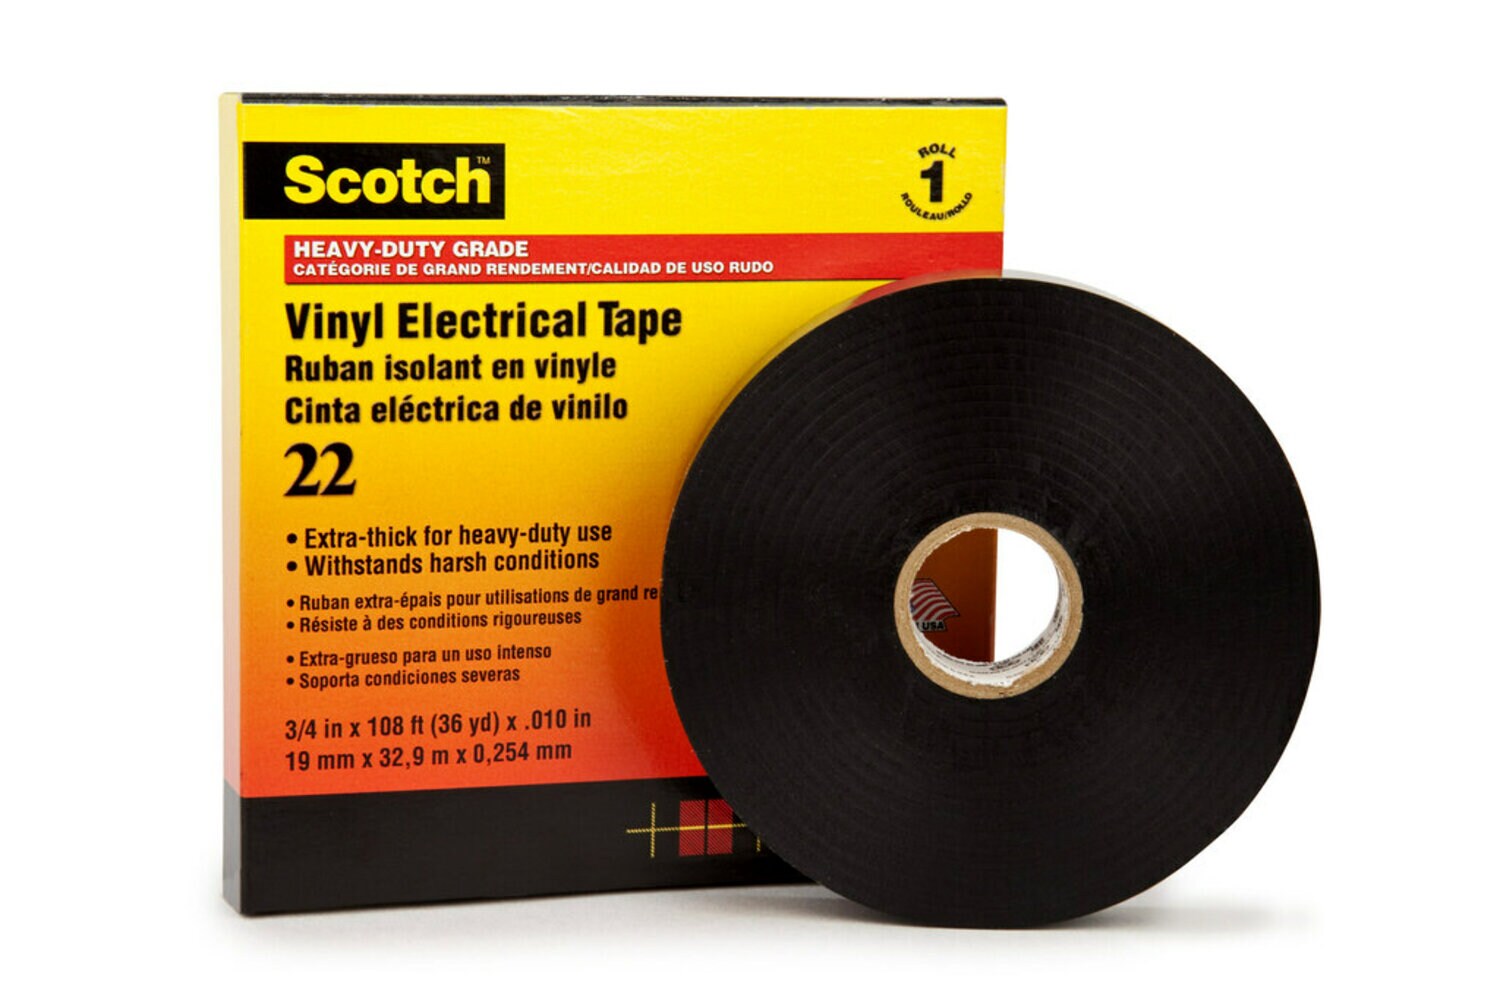 7000042539 - Scotch Vinyl Electrical Tape 22, 1 in x 36 yd, Black, 12 rolls/carton,
48 rolls/Case